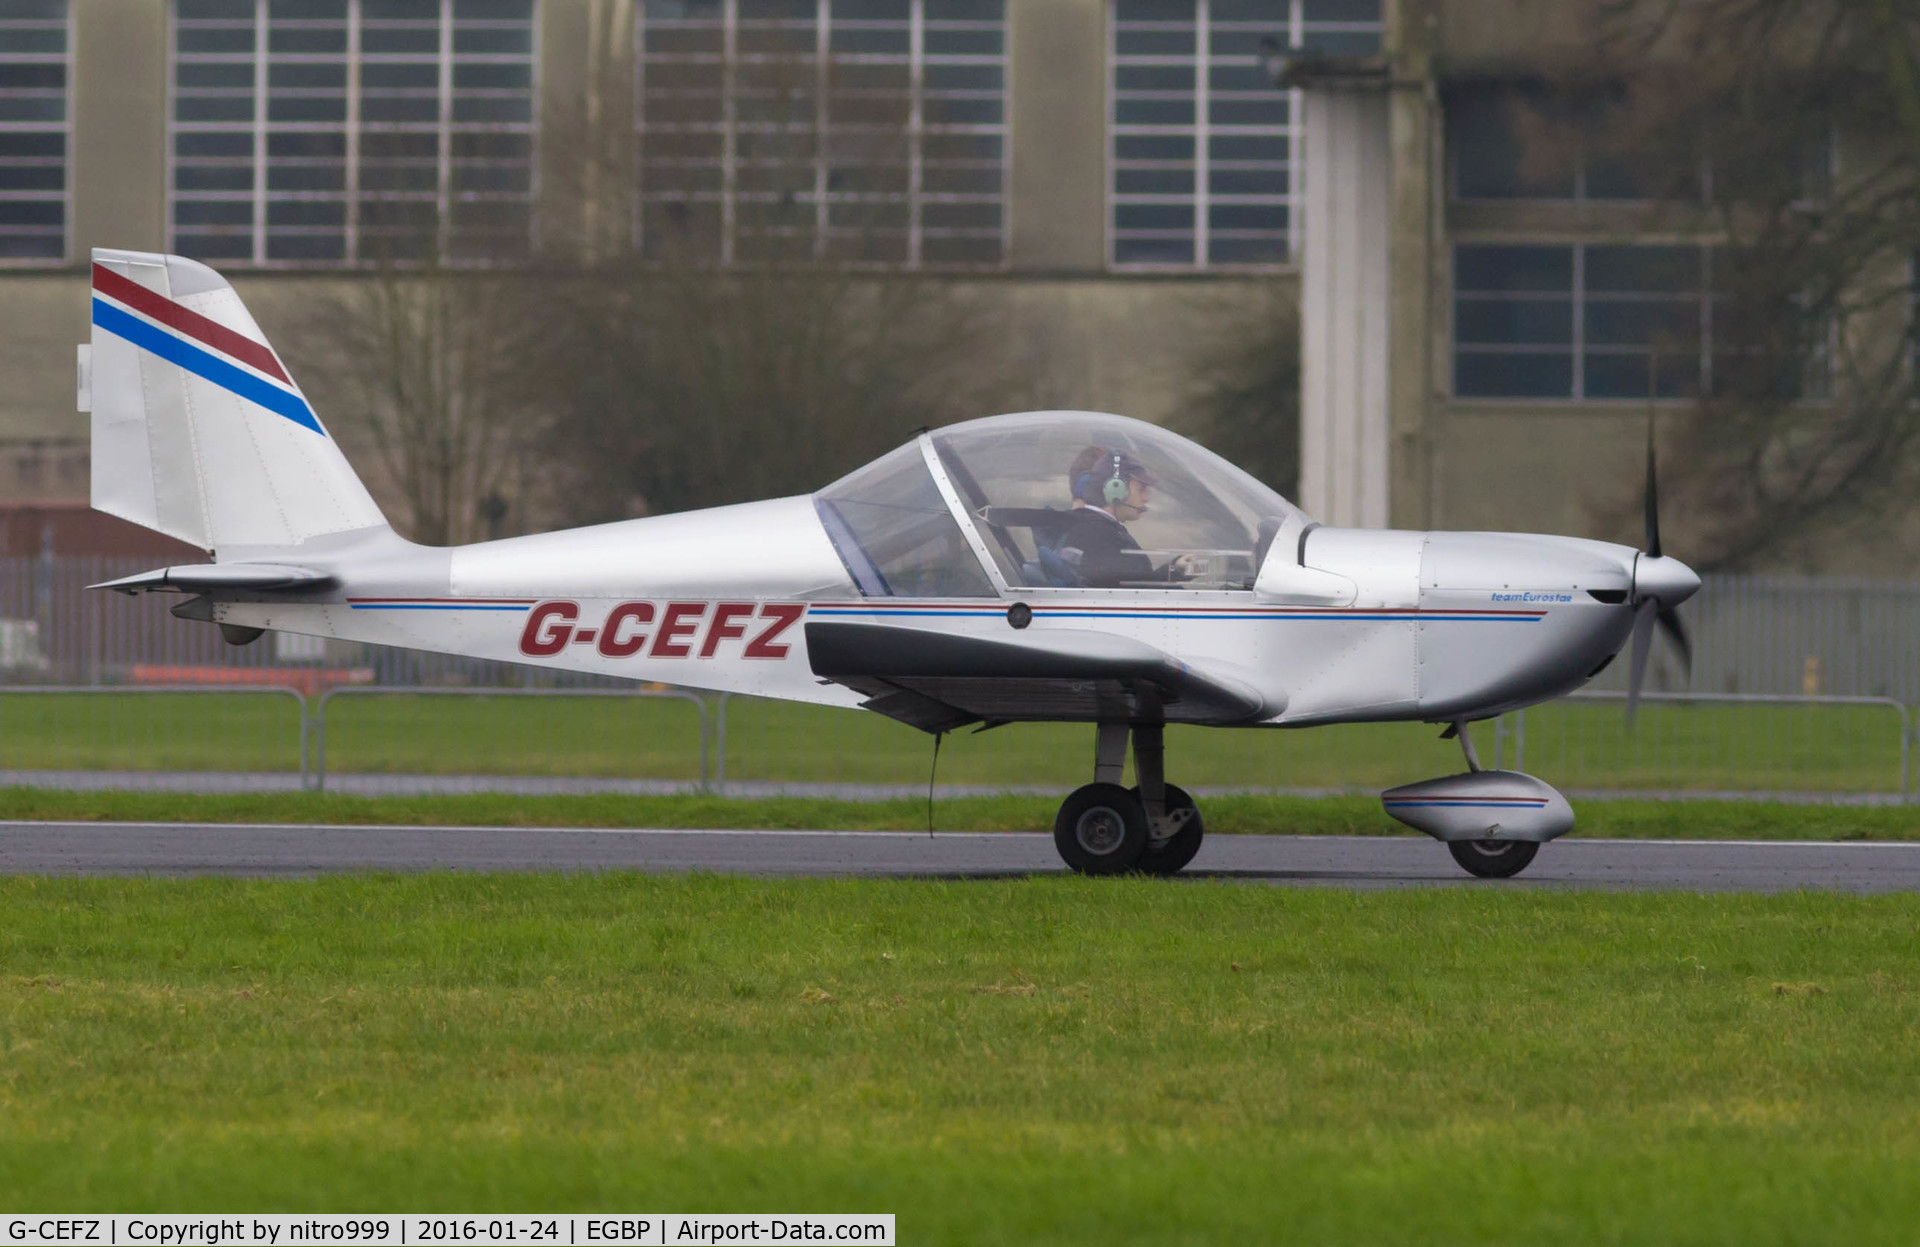 G-CEFZ, 2006 Cosmik EV-97 TeamEurostar UK C/N 2824, G-CEFZ at EGBP (Kemble Airfield, UK)